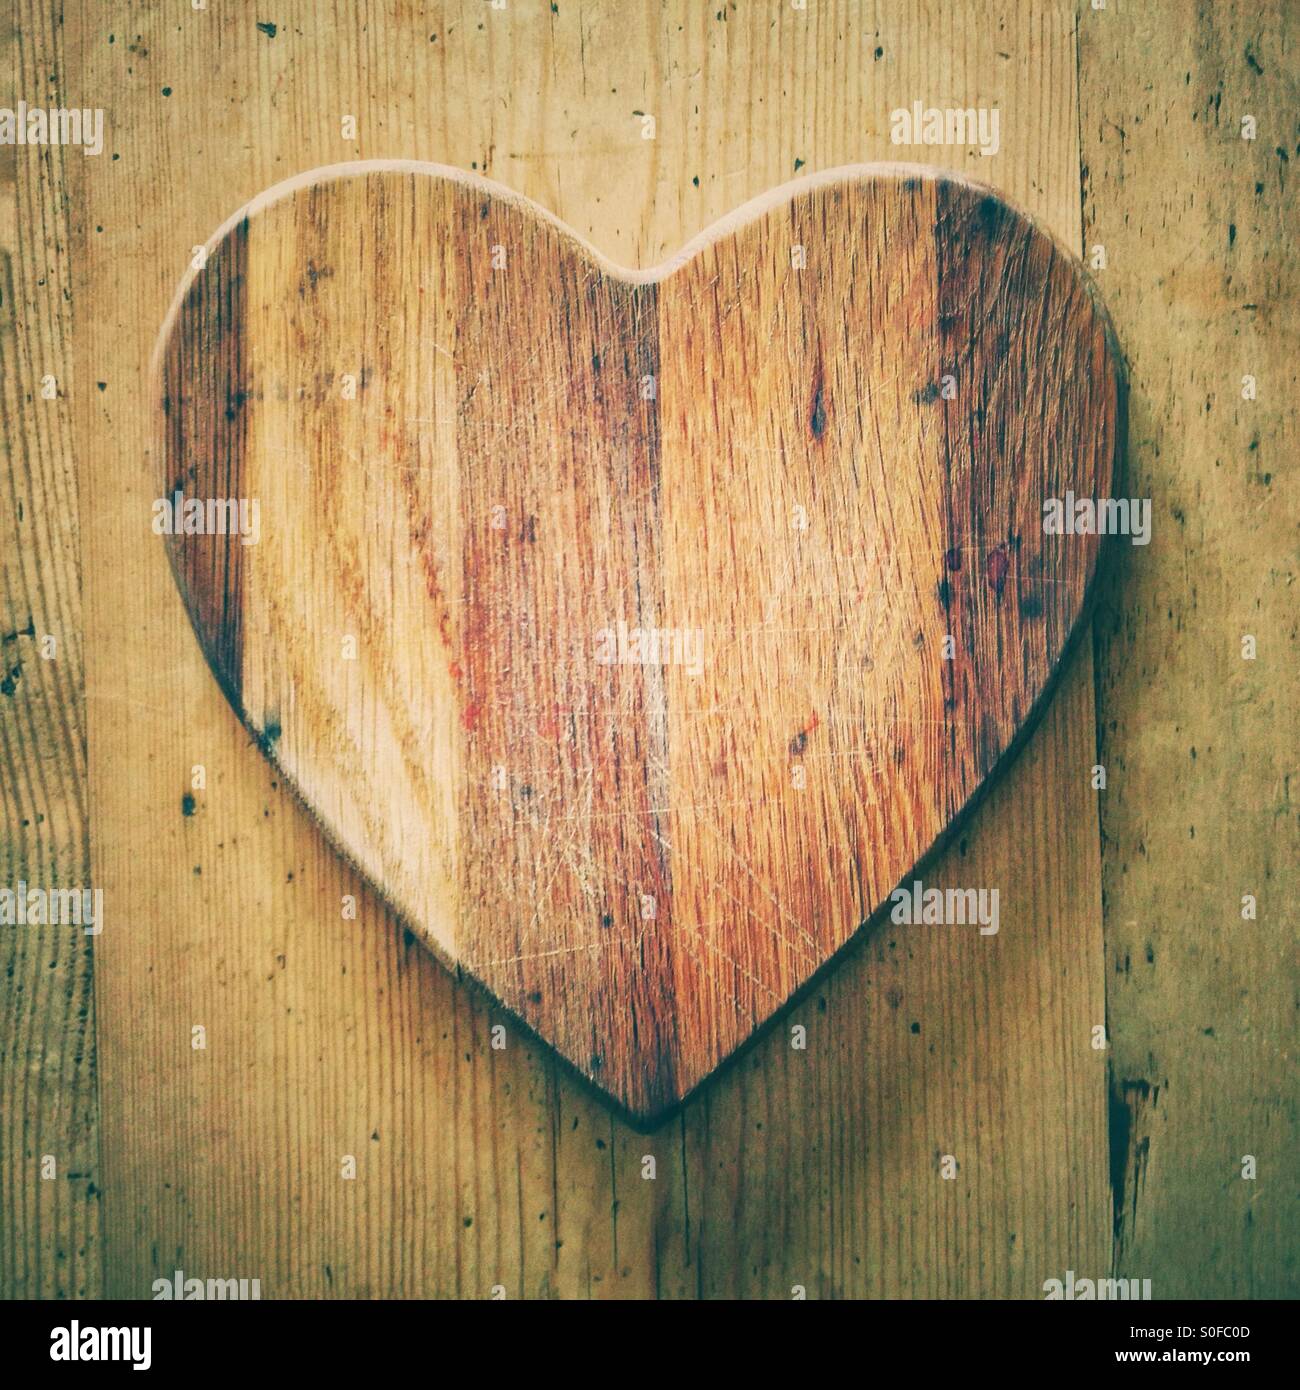 Wooden heart Stock Photo